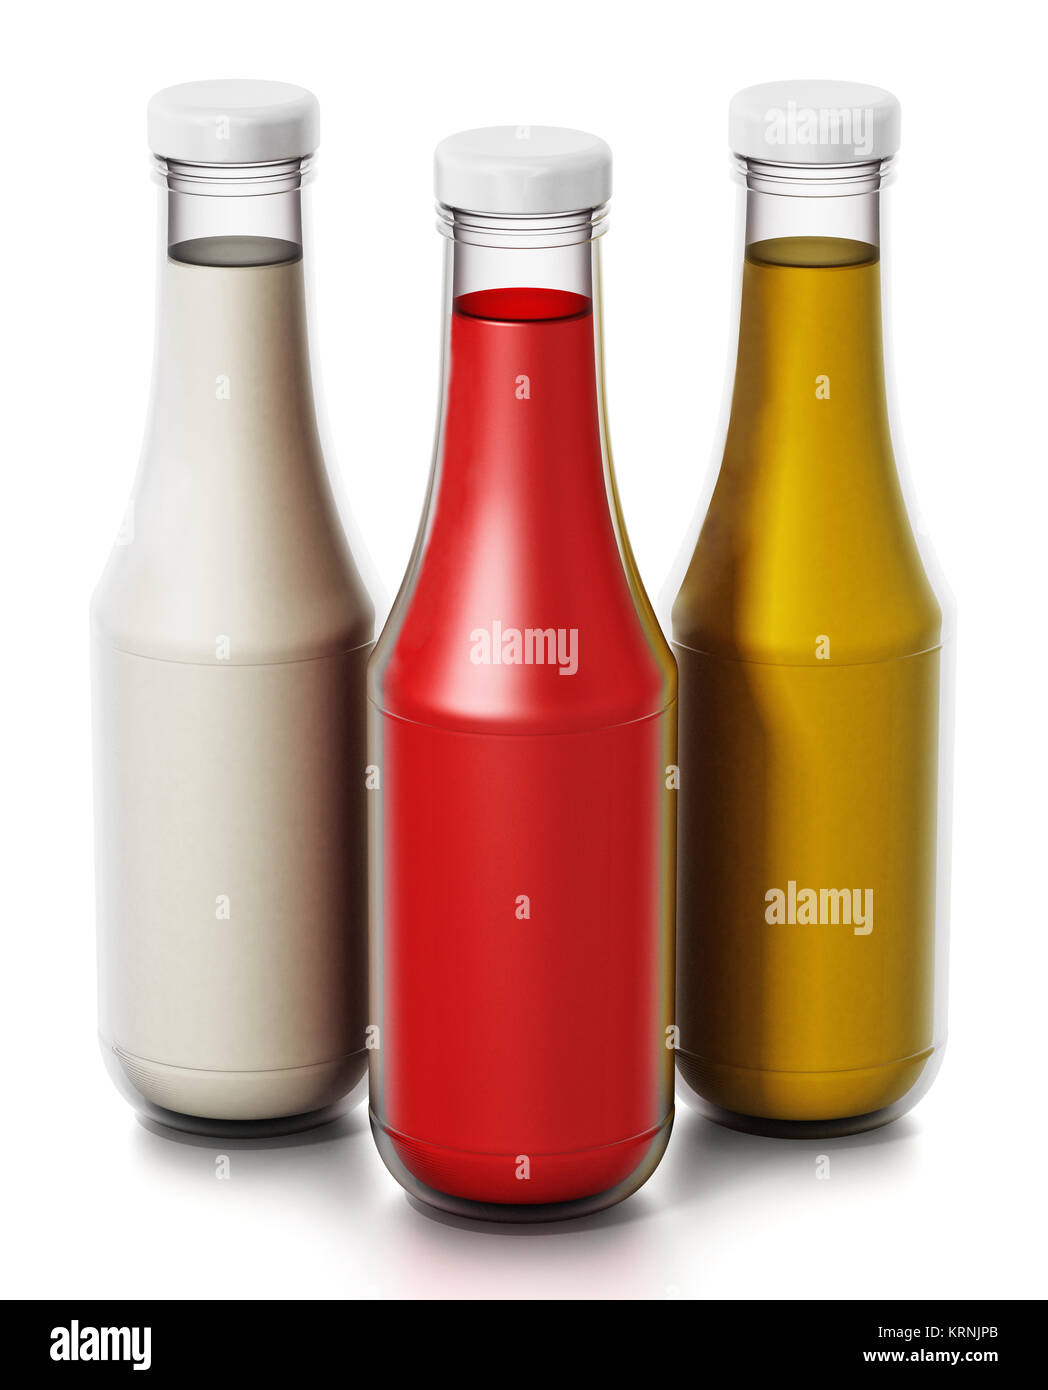 https://c8.alamy.com/comp/KRNJPB/ketchup-mayonnaise-and-mustard-bottles-isolated-on-white-background-KRNJPB.jpg